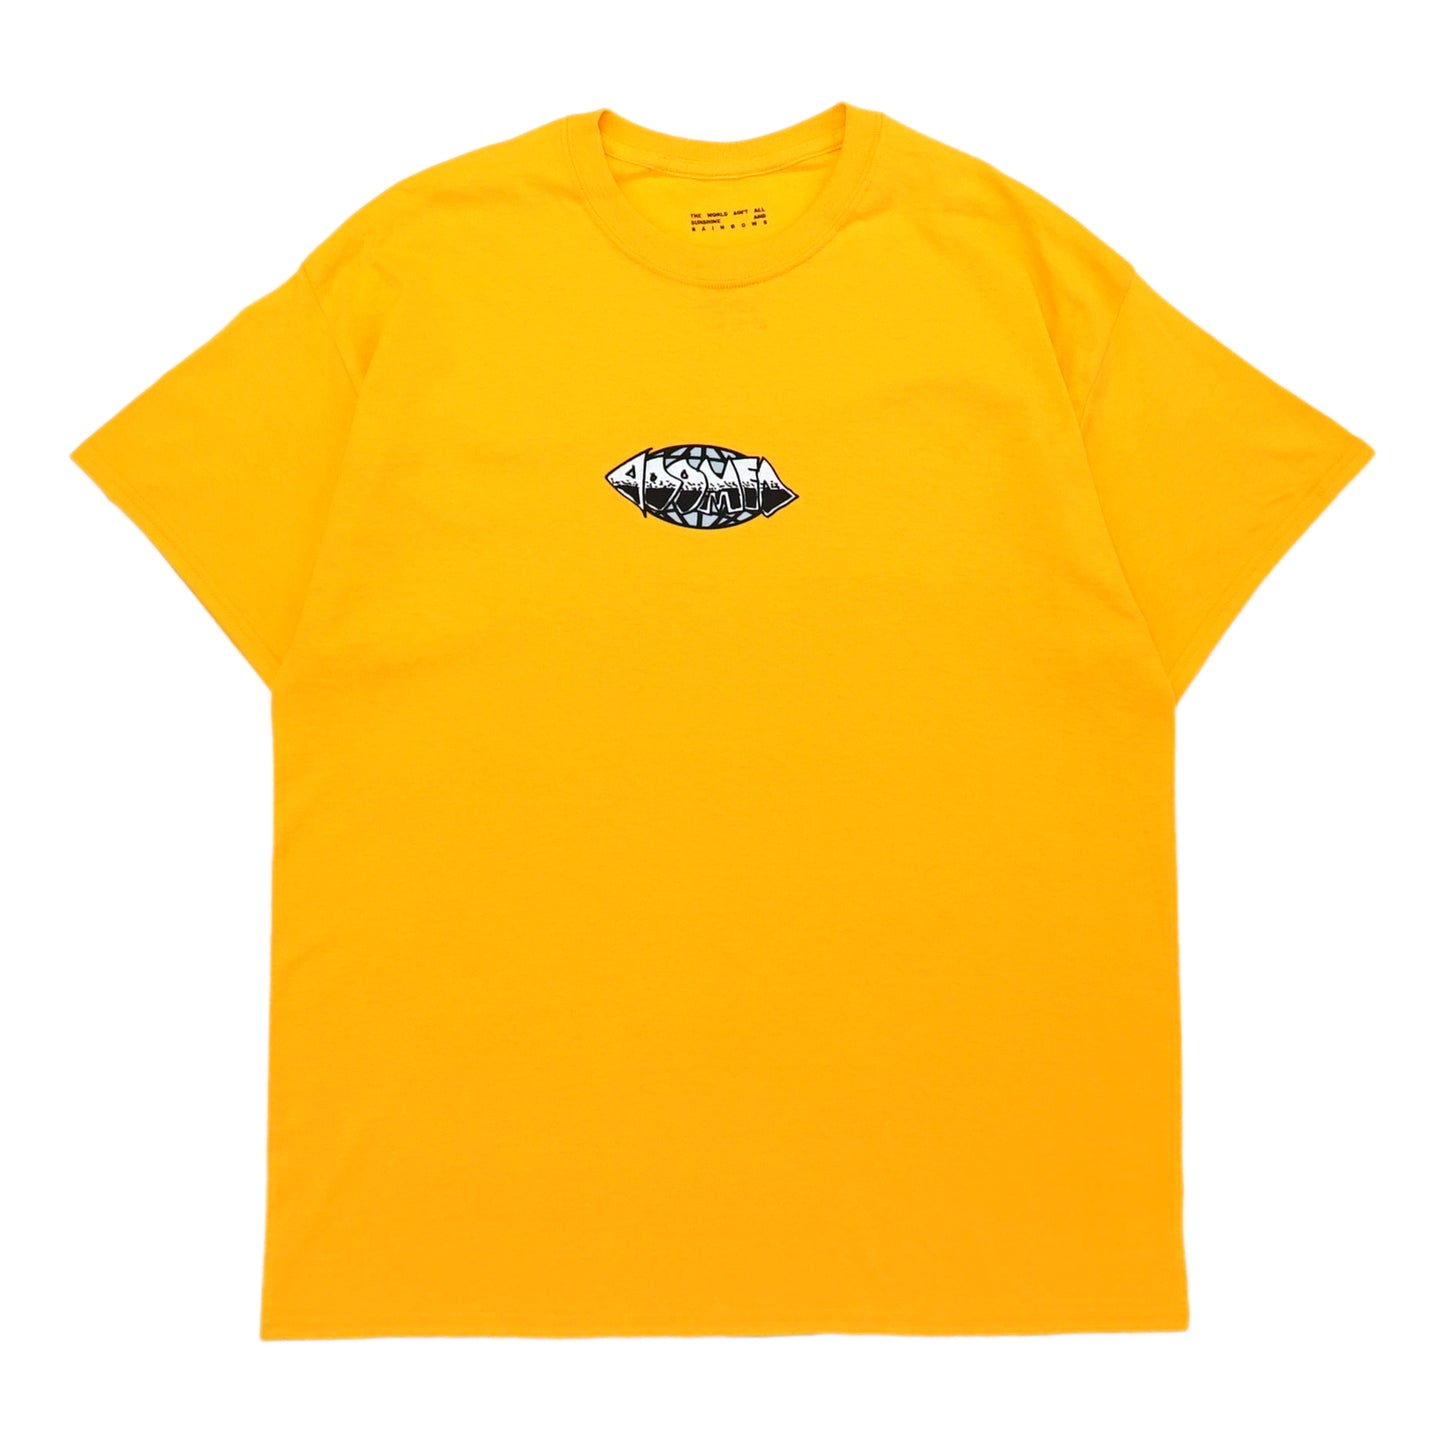 DOOMED - Earth T-Shirt/Gold